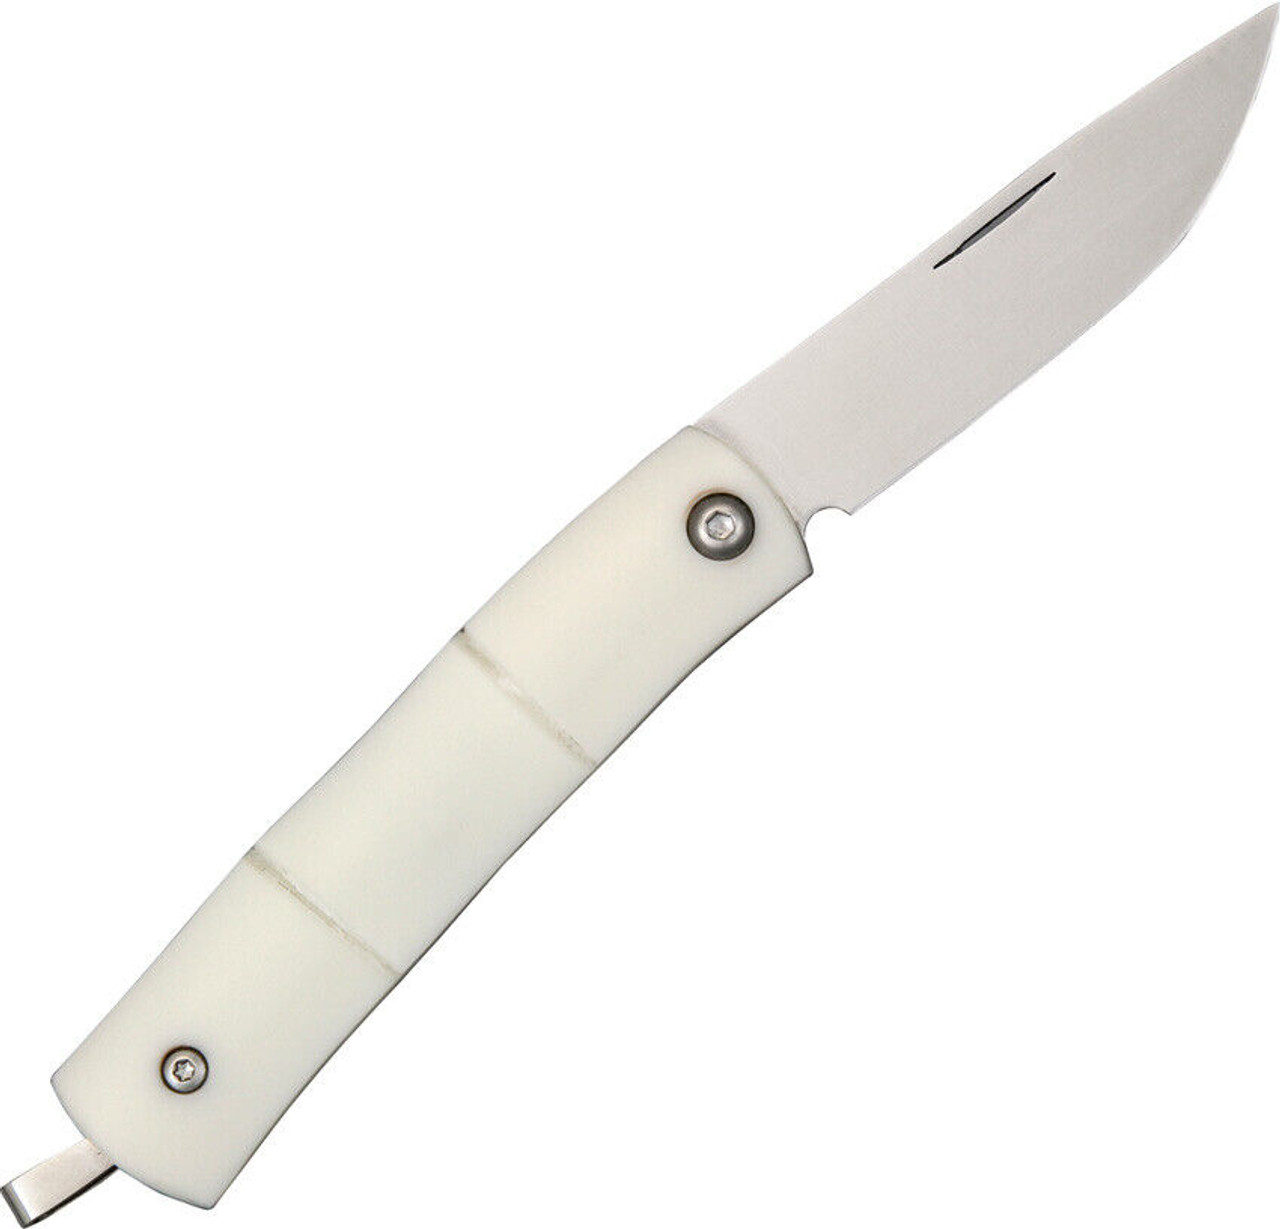 Mcusta Take Series Money Clip Knife (MC-0153) 2.3" AUS-8 Drop Point Plan Blade, White Acrylic Handle